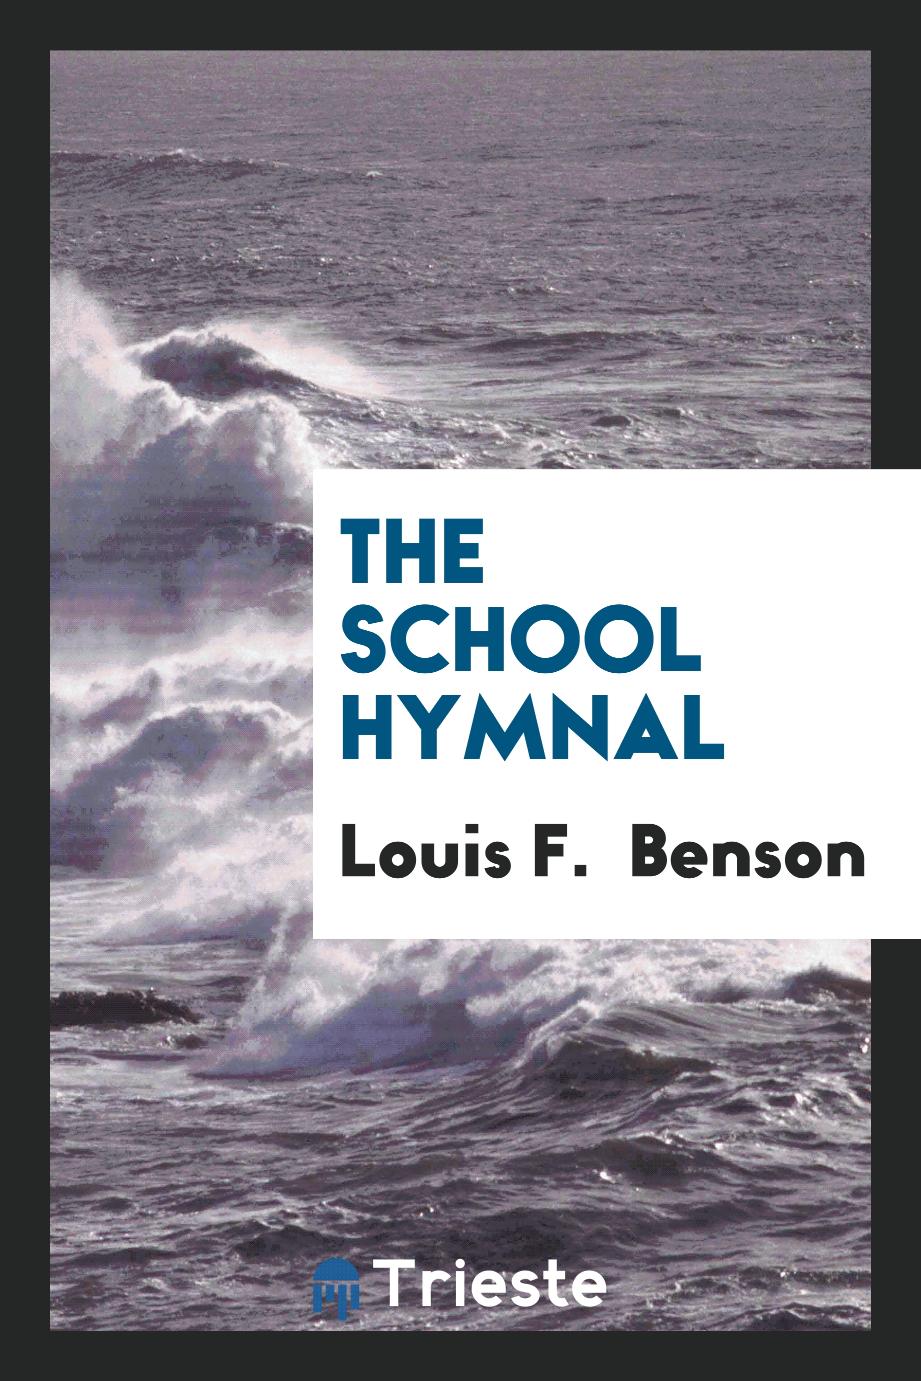 The School Hymnal